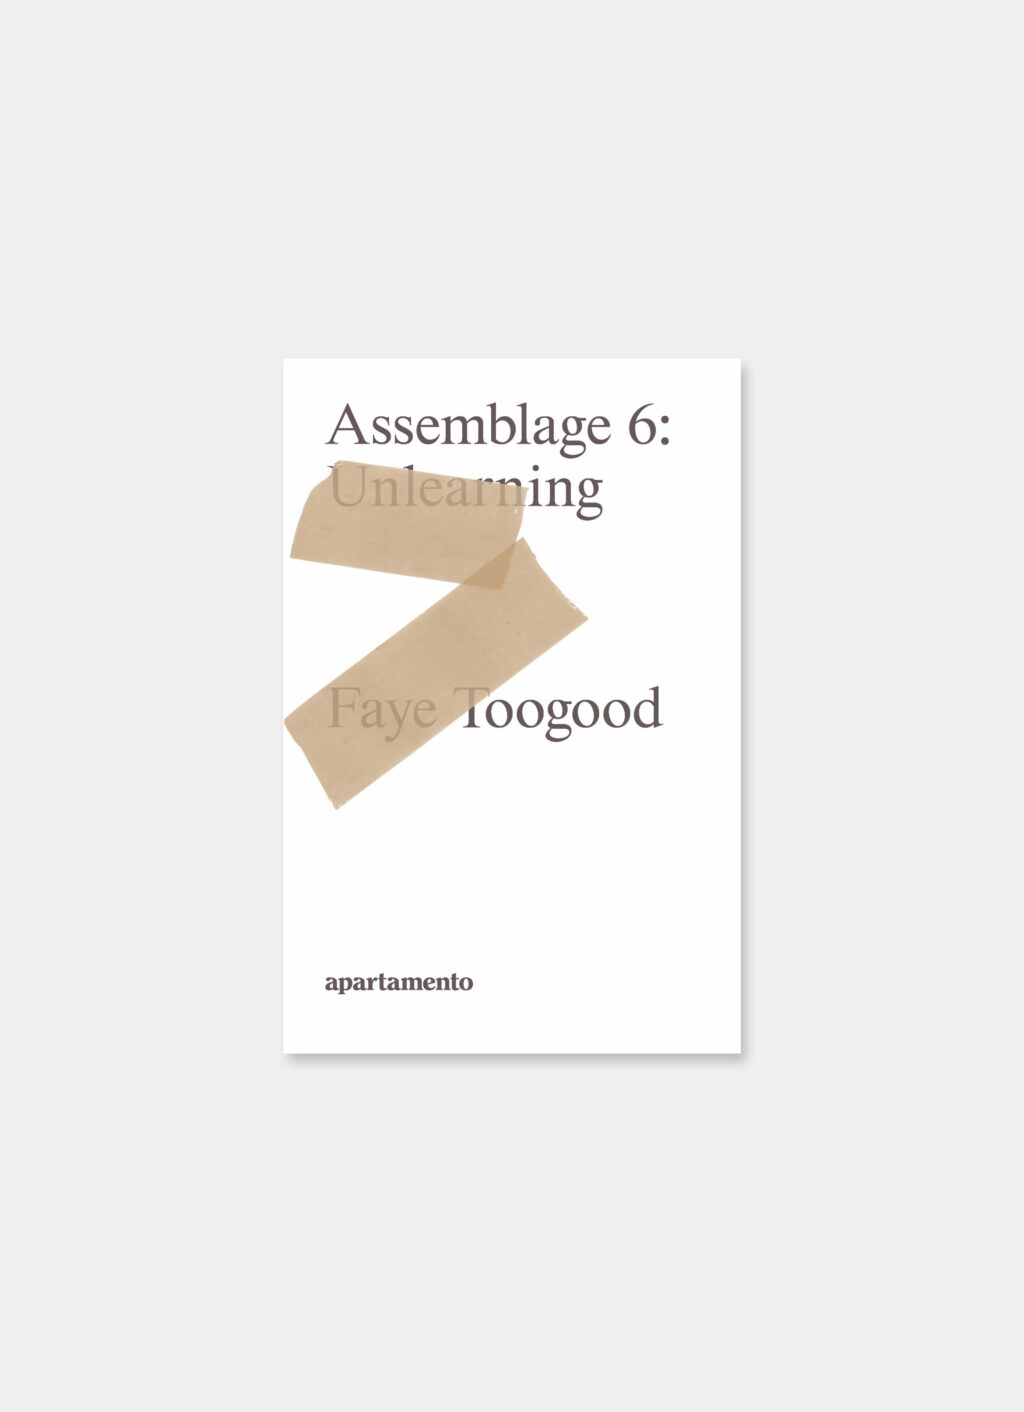 Faye Toogood - Apartamento - Assemblage 6 - Unlearning